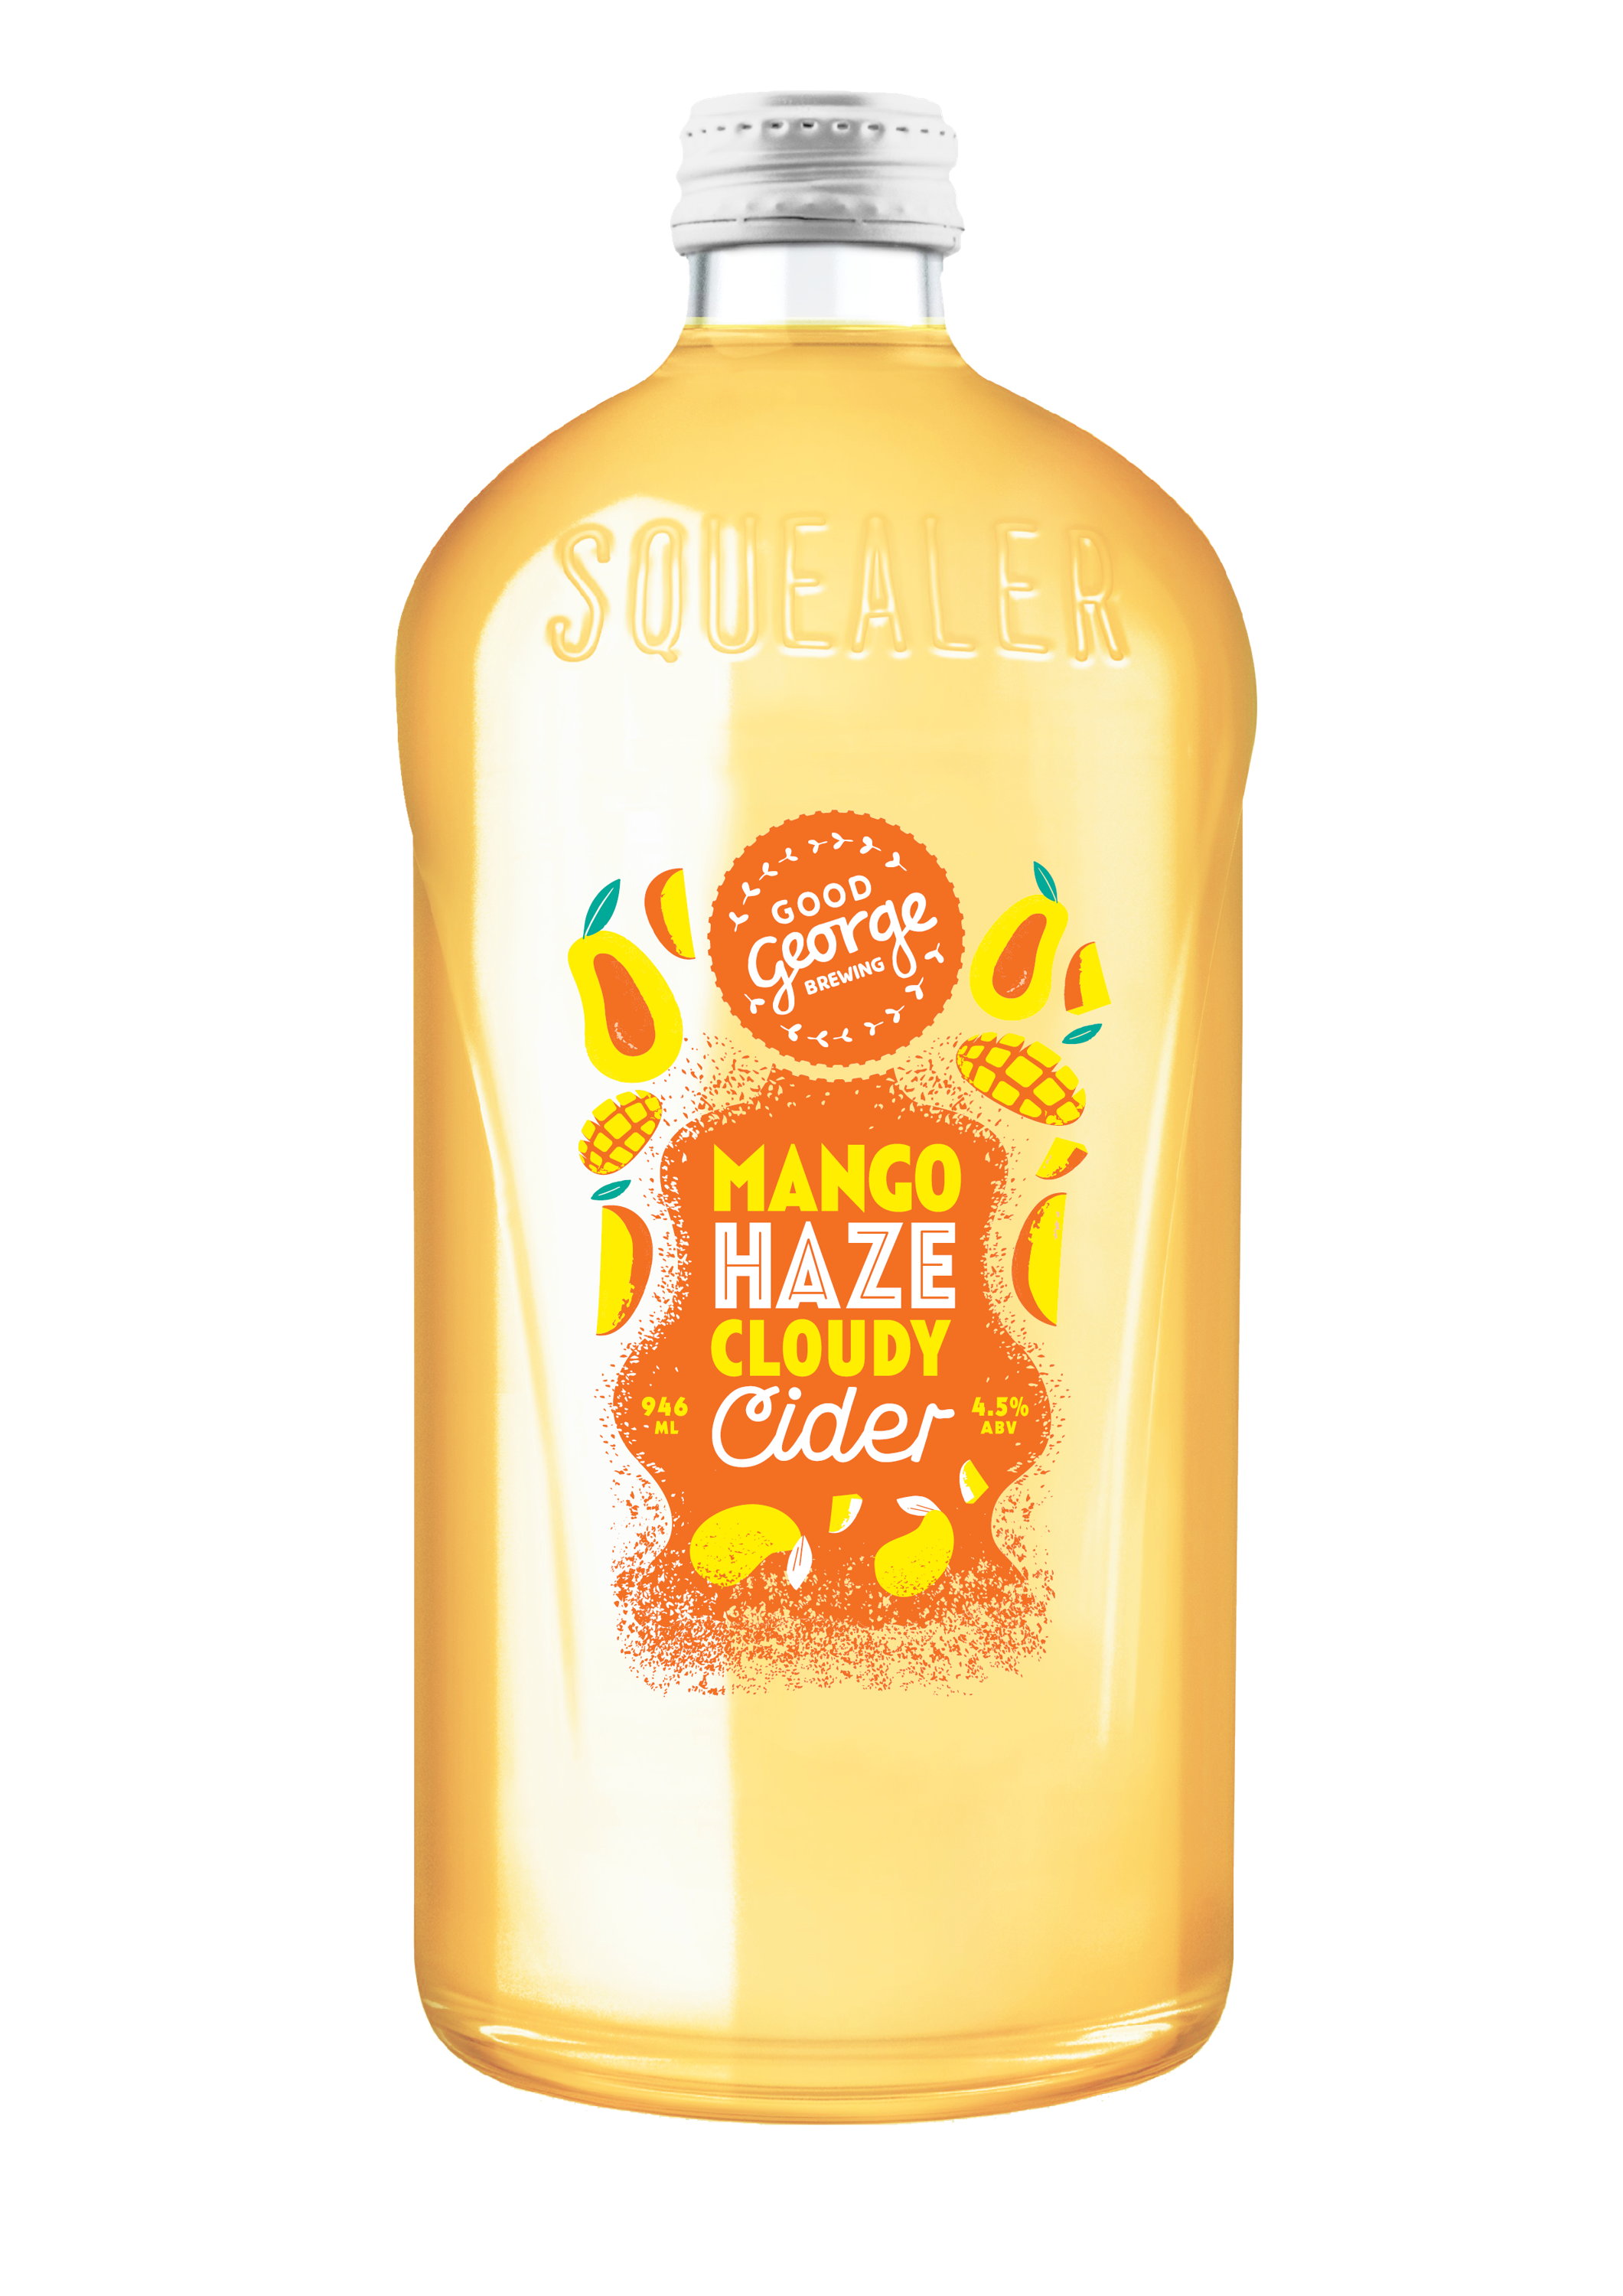 Good George Mango Haze Cloudy Cider Squealer